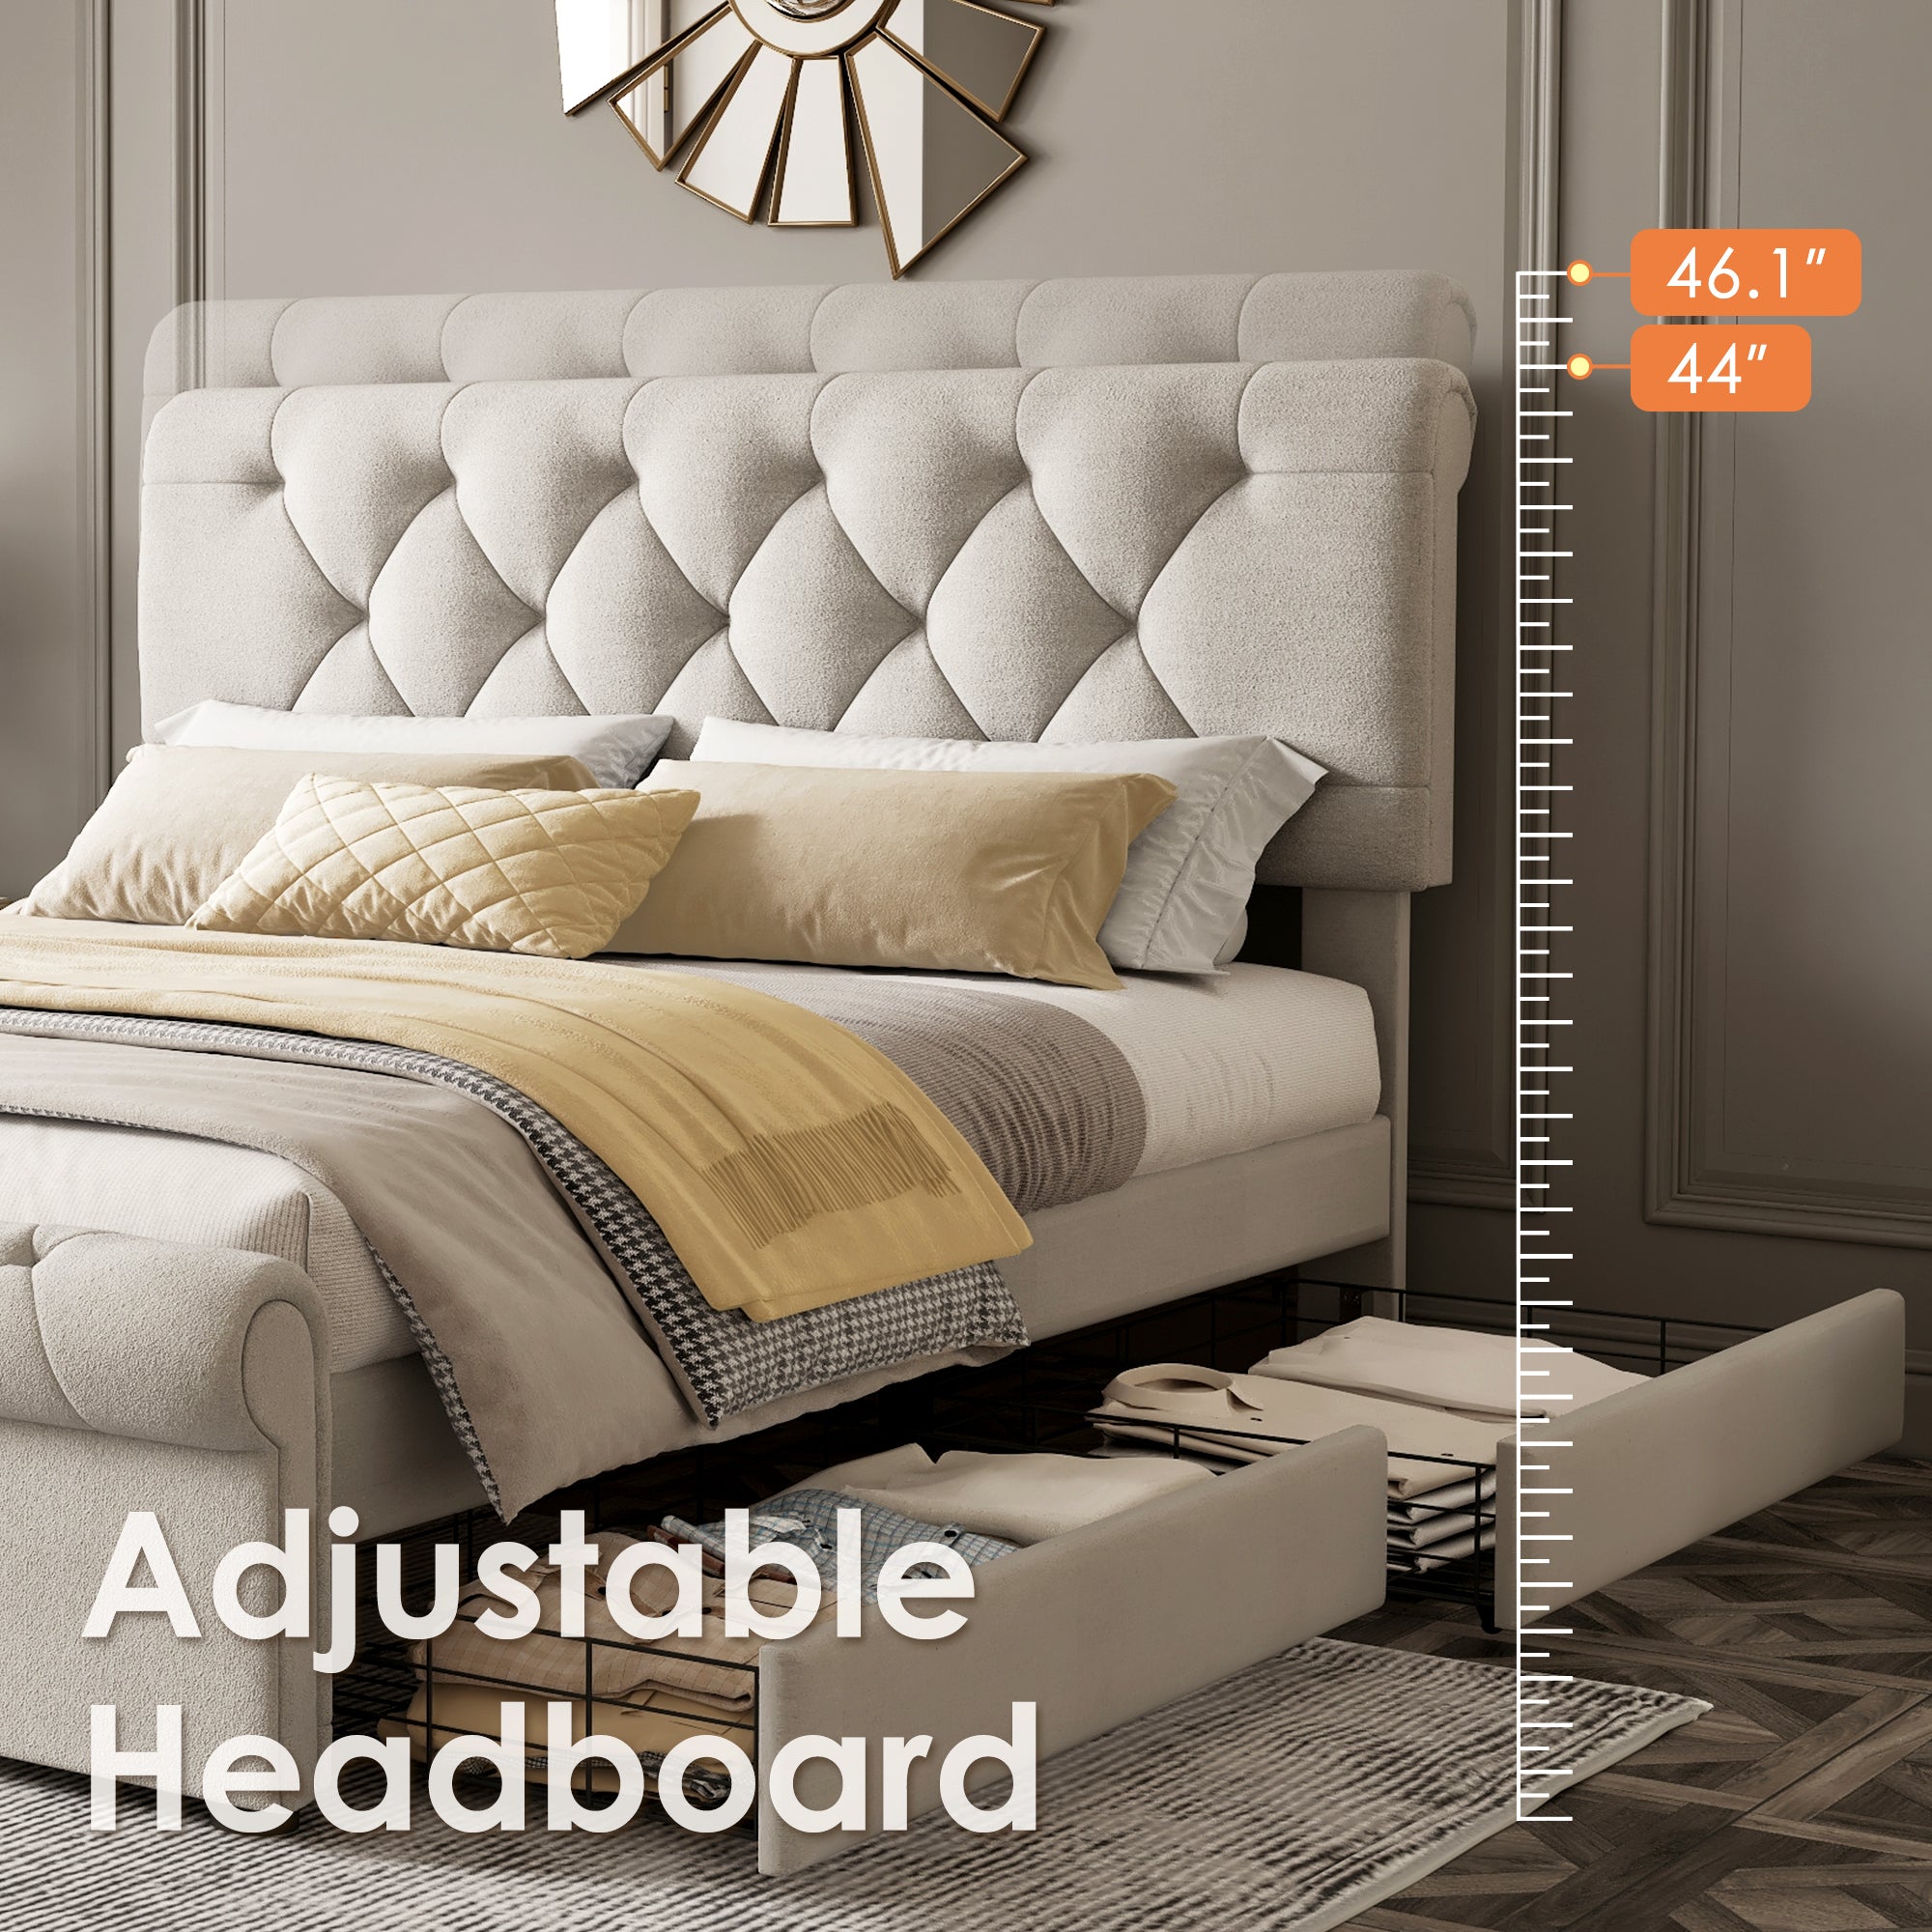 Bellemave® Upholstered Platform bed with Antique Curved Headboard and 4 Drawers Bellemave®